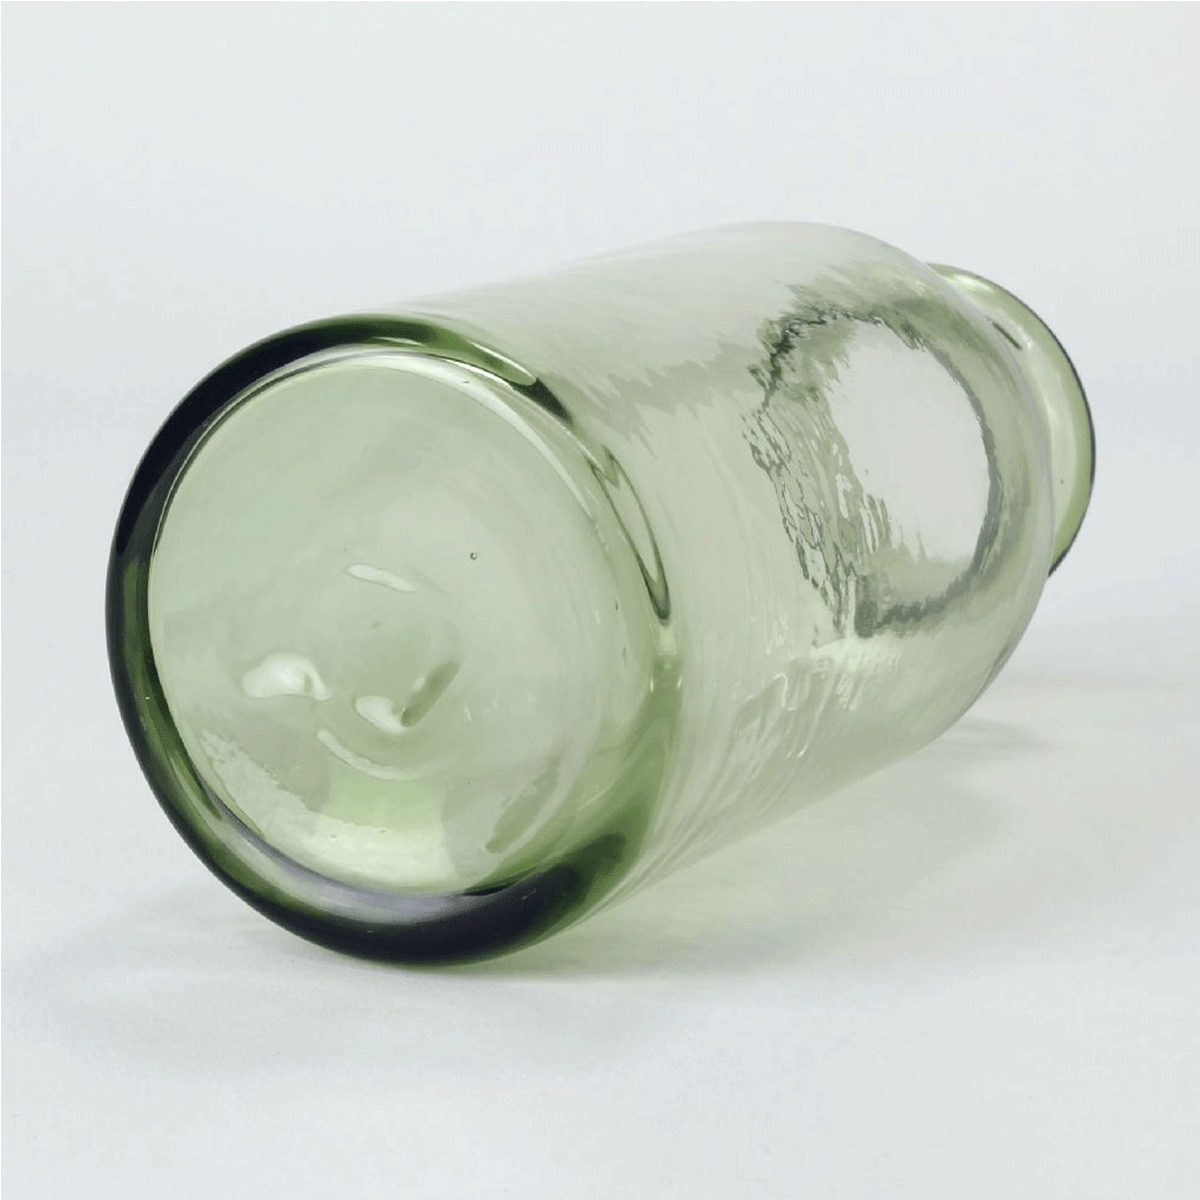 Glass Flower Vase / グラスフラワーベース